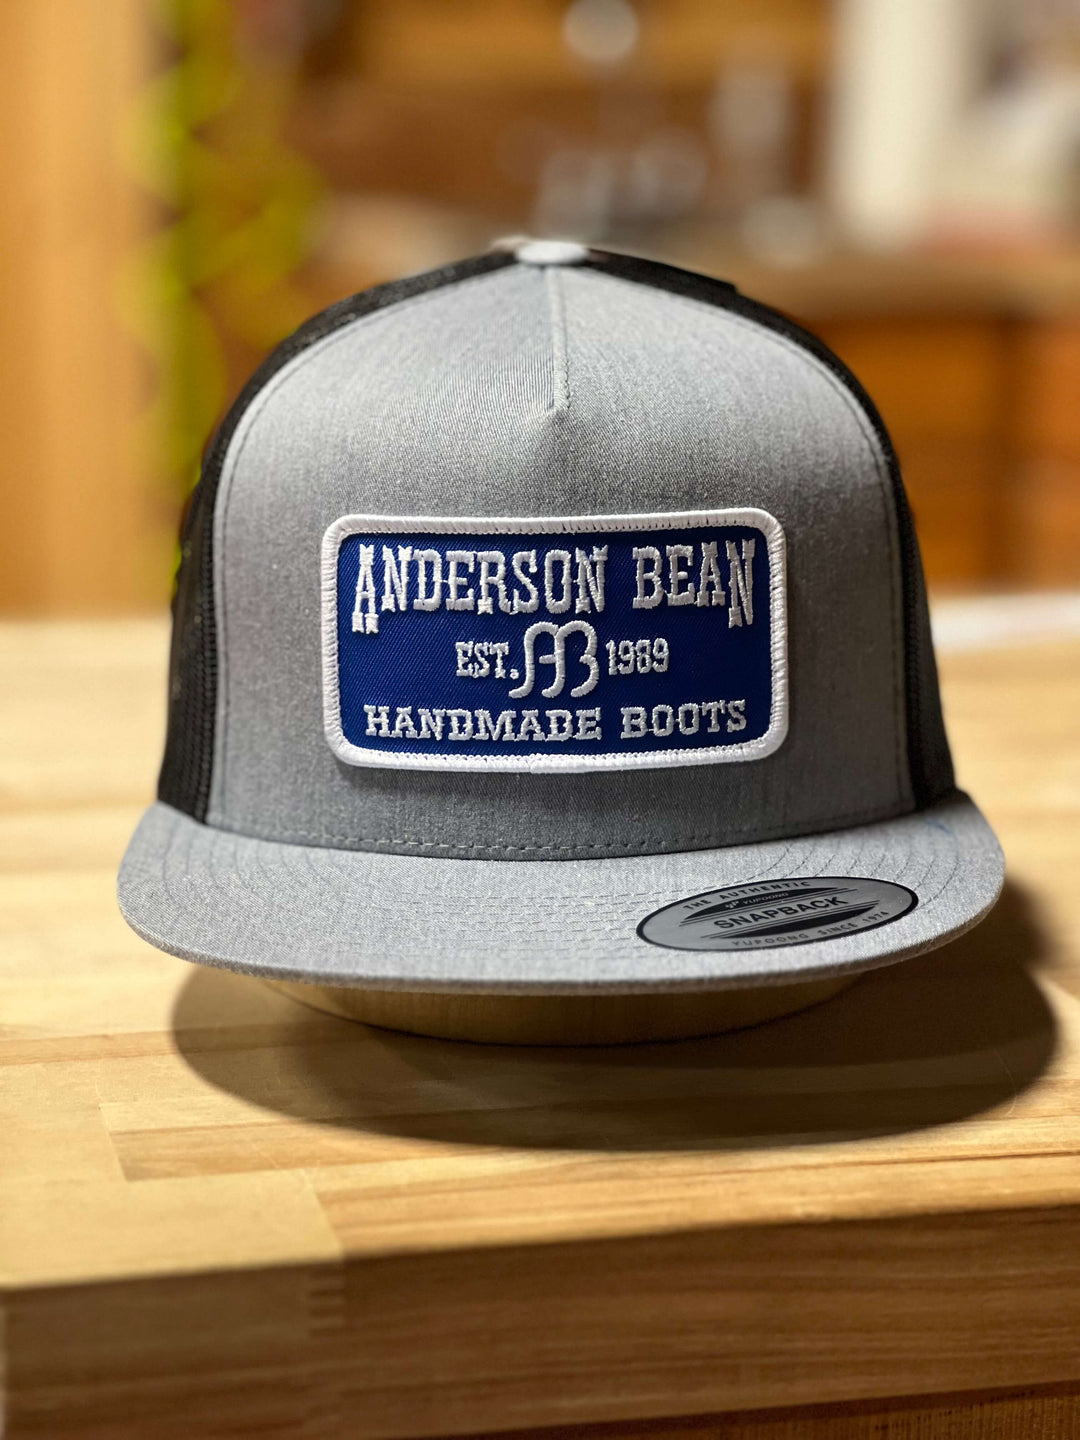 Anderson Bean Handmade Boots Snapback hat, grey front, black mesh